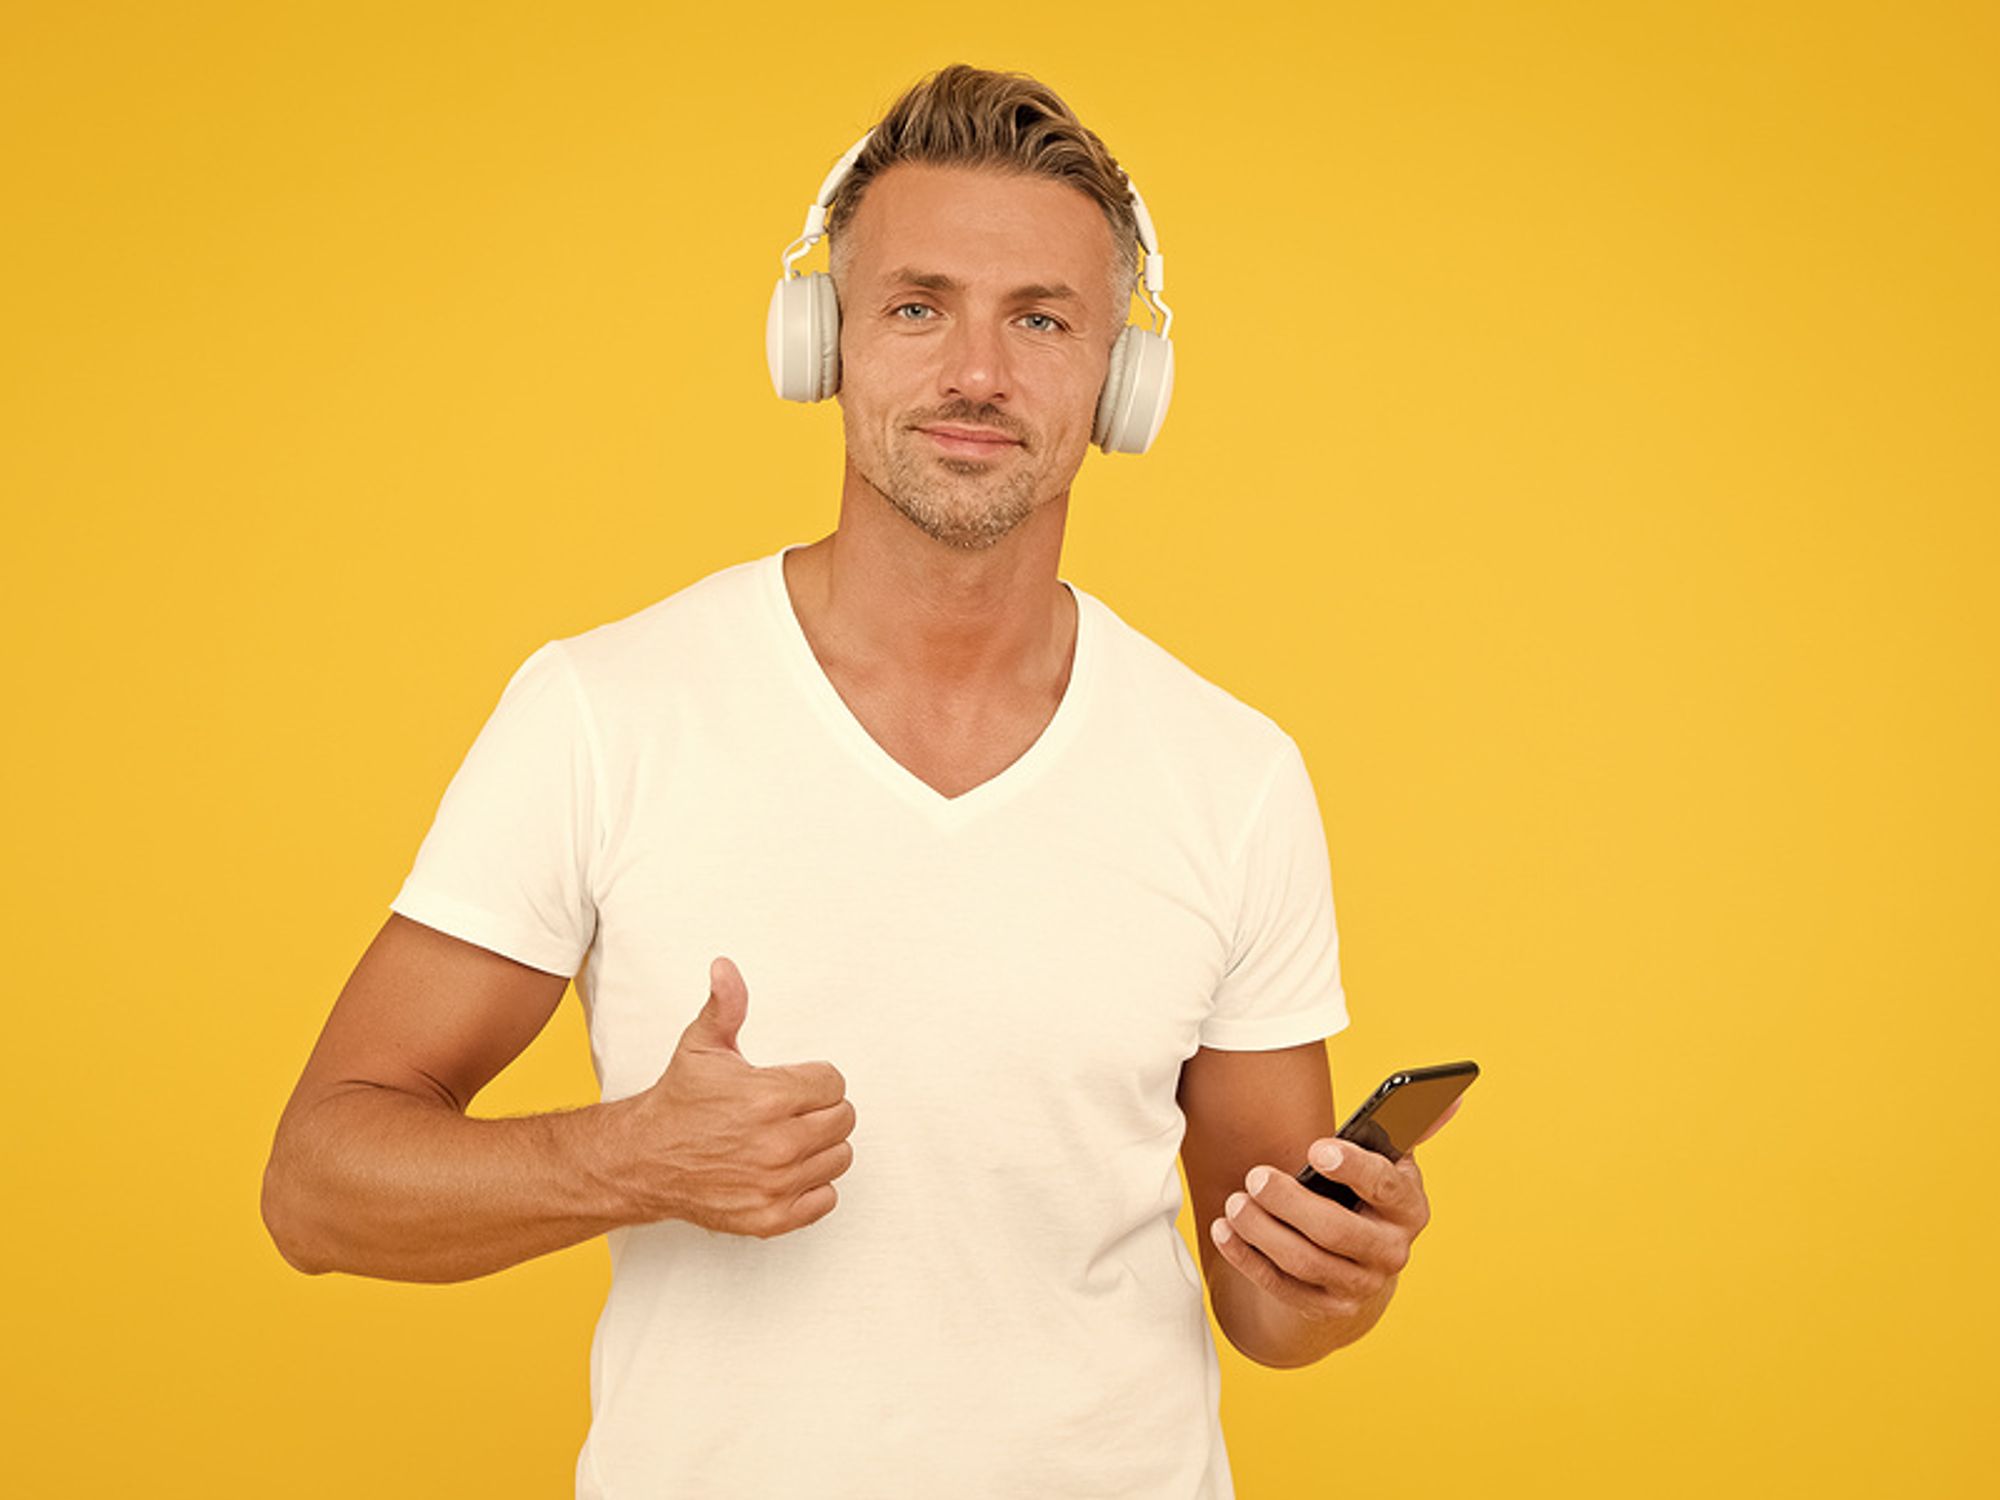 Man listens to inspiring podcast episodes